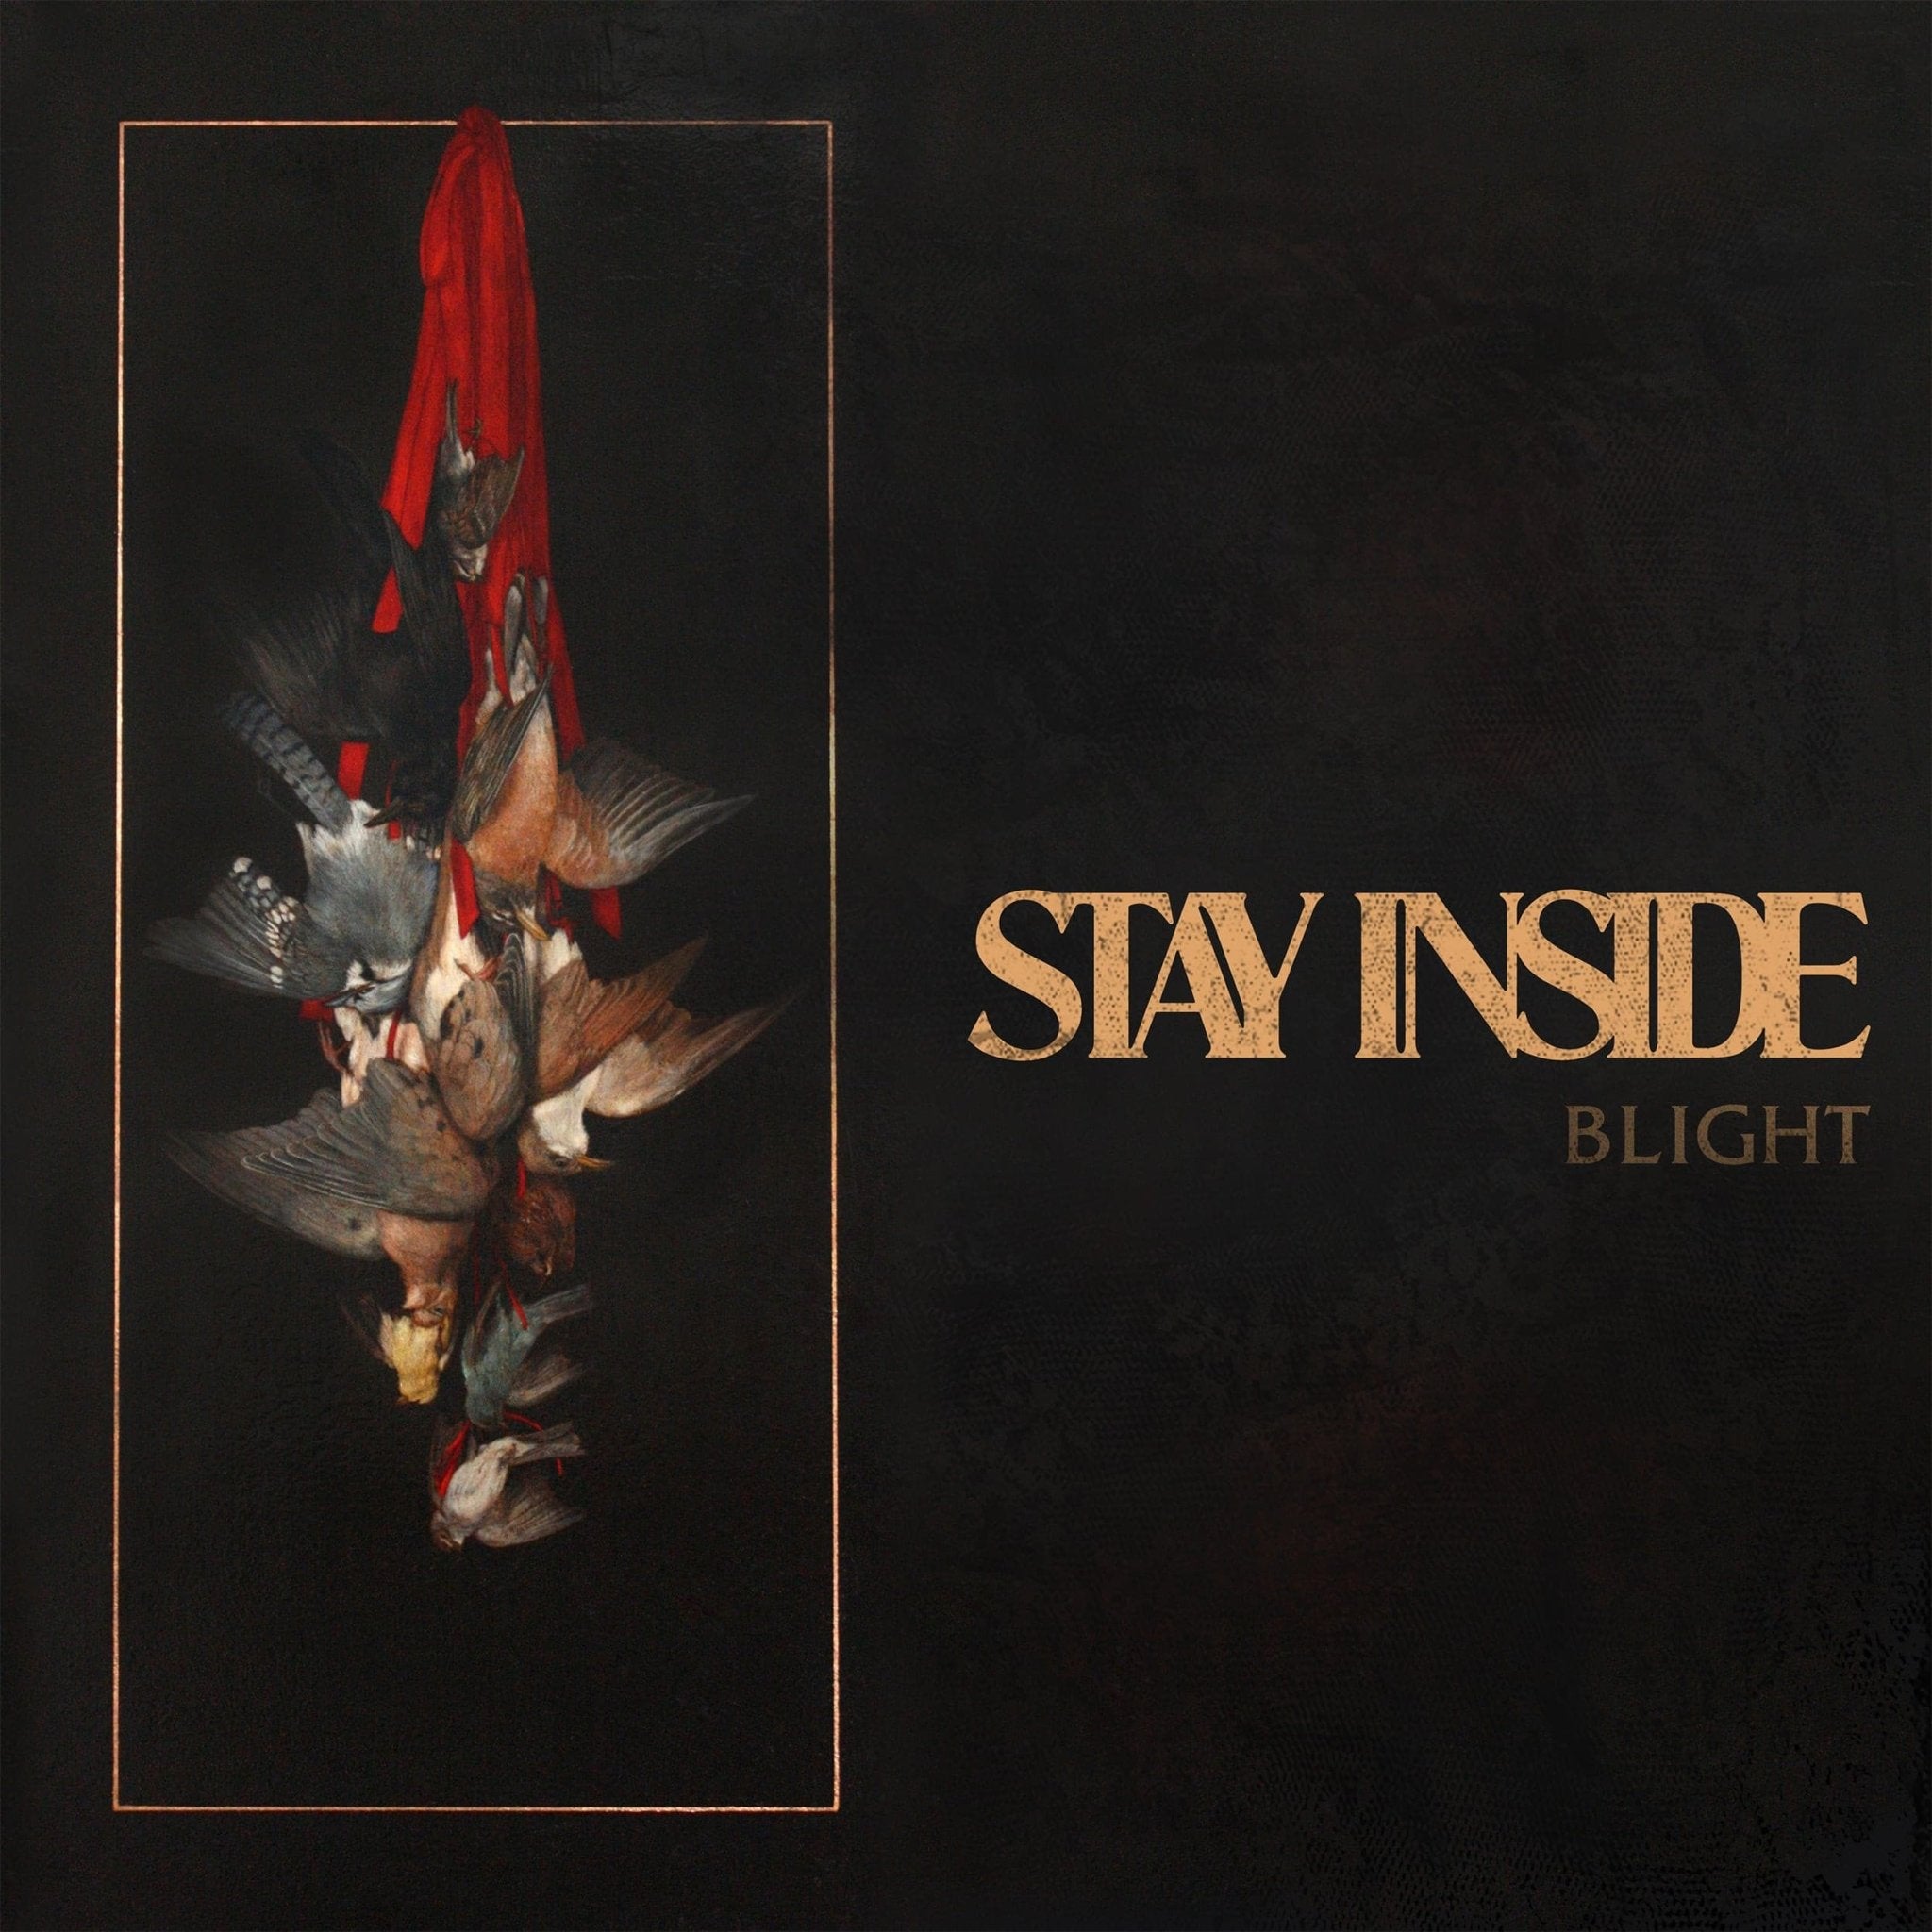 Blight - NO SLEEP RECORDS - Stay Inside